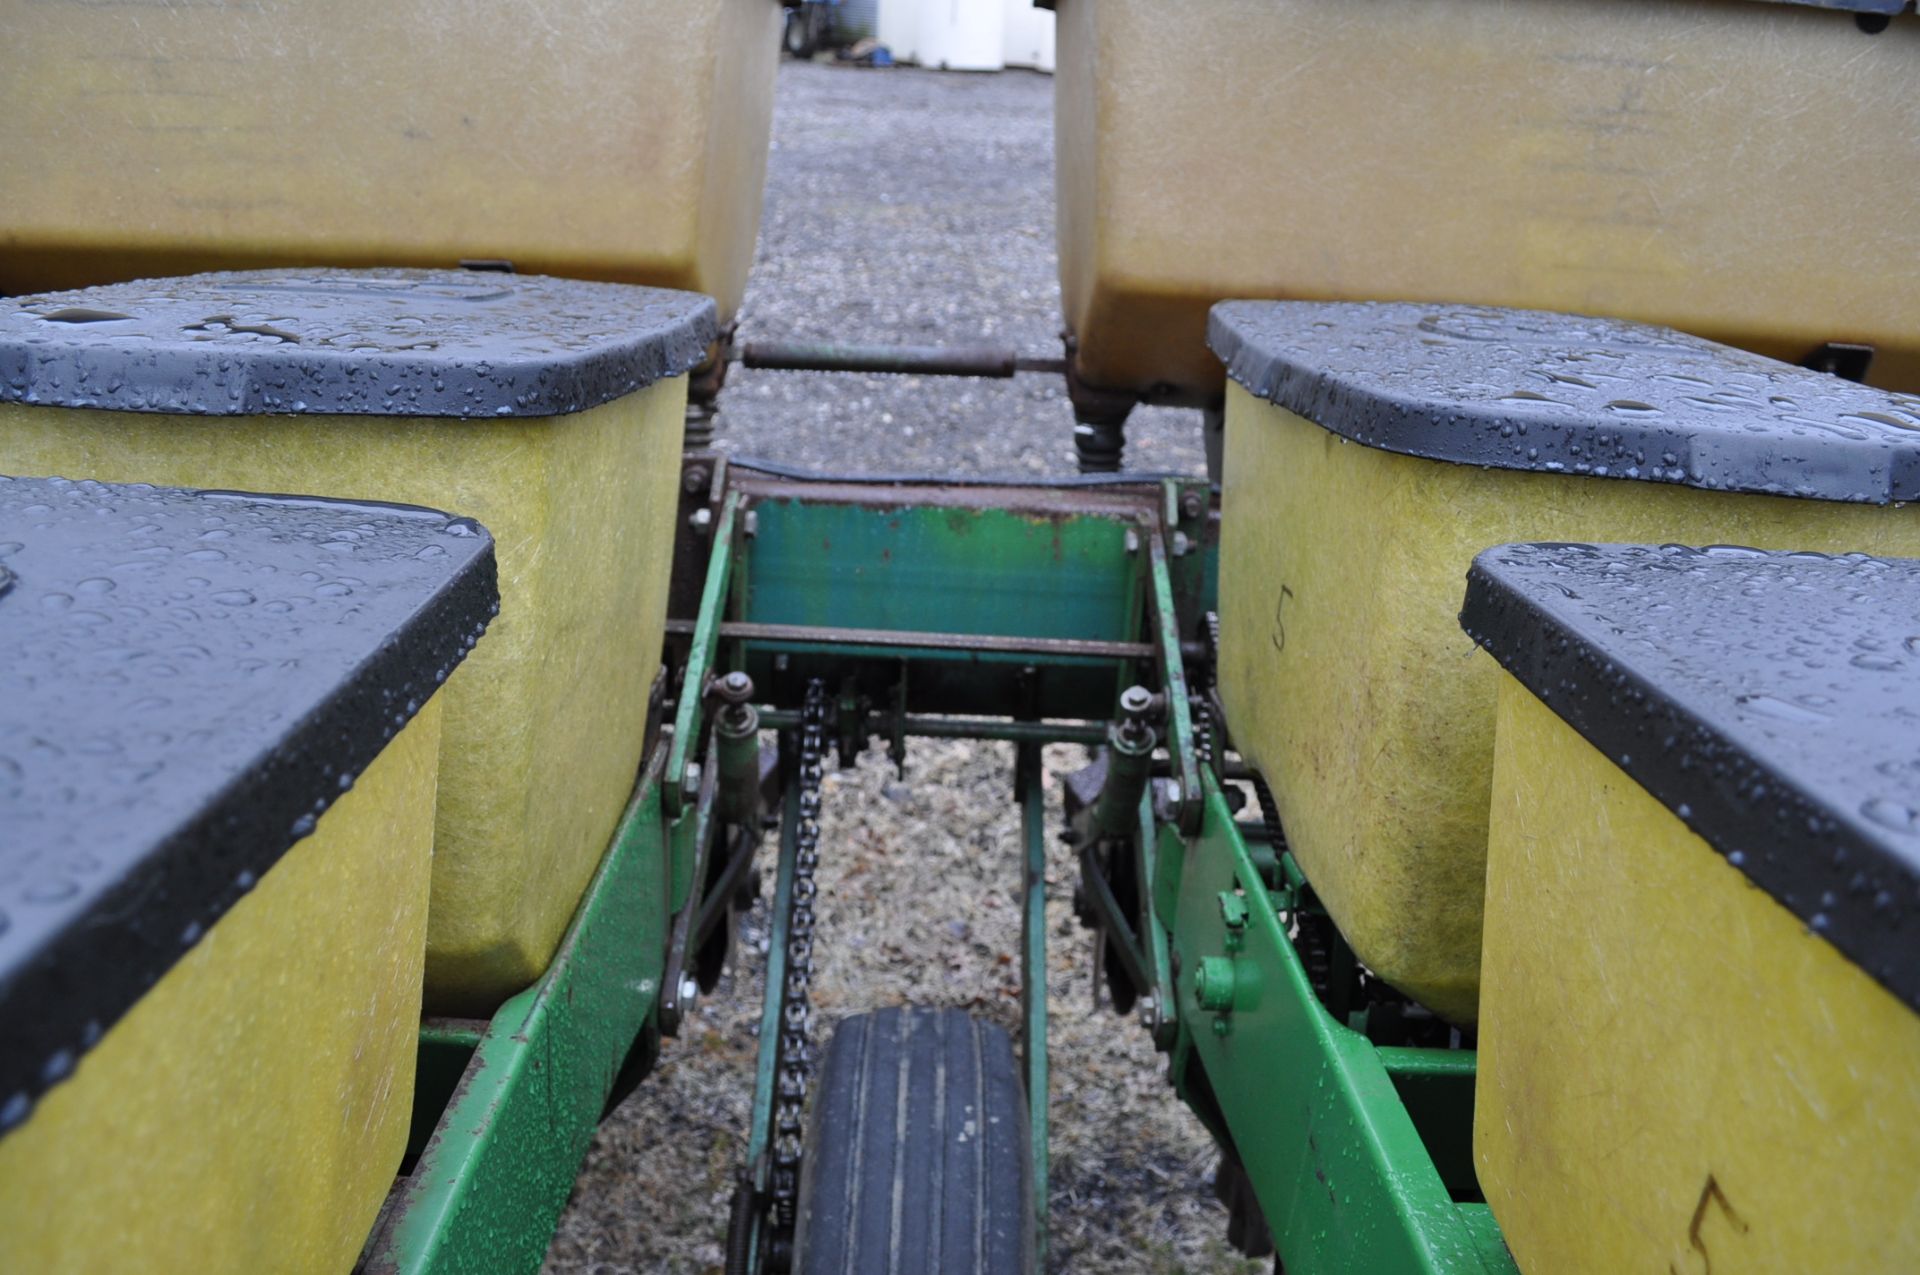 John Deere 7000 corn planter, 6 row 30”, 2x2 dry fertilizer, no-till coulters, PP finger pickup - Image 10 of 11